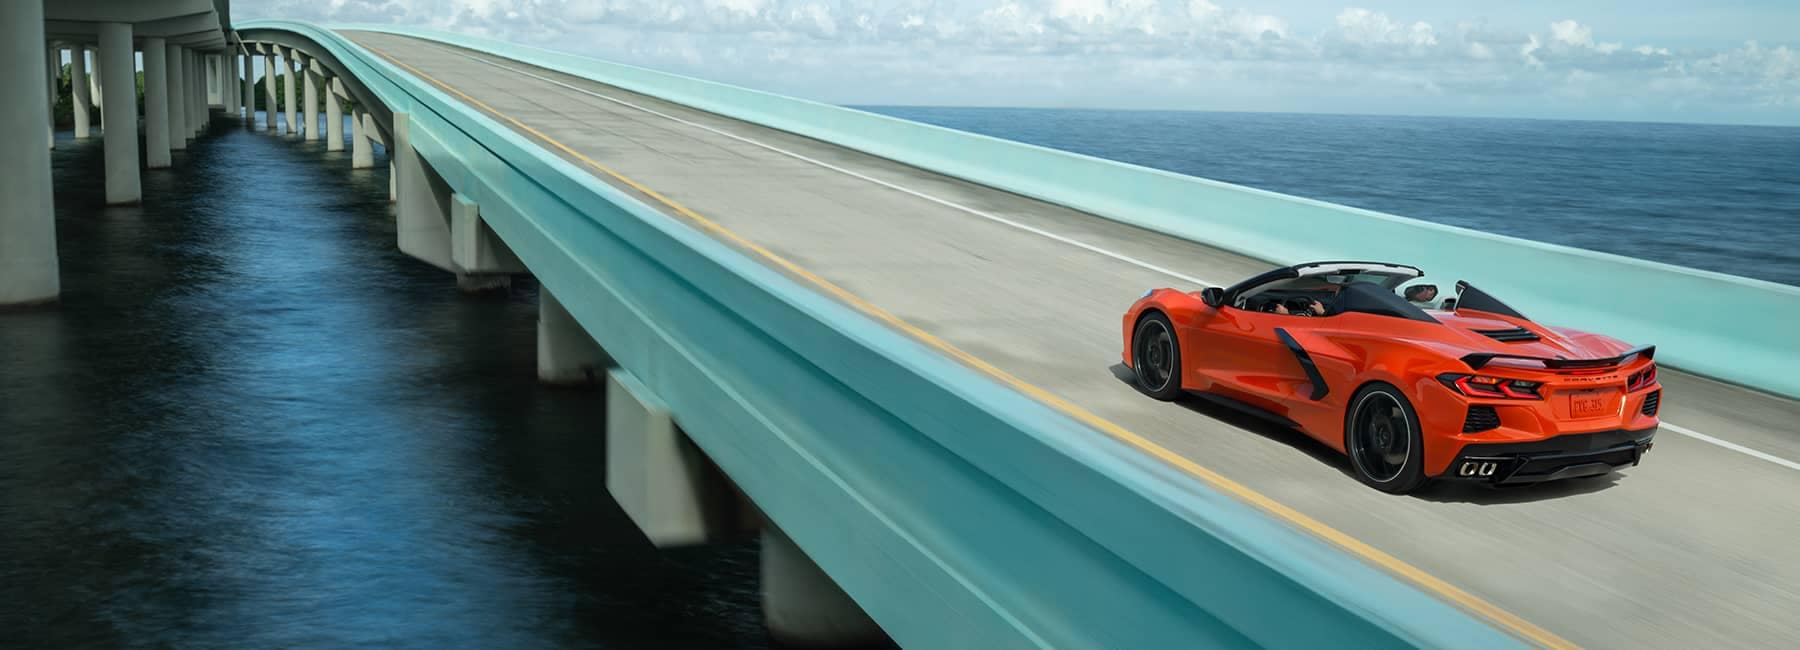 Red 2020 Chevrolet Corvette Stingray Convertible Driving on an Ocean Highway_mobile